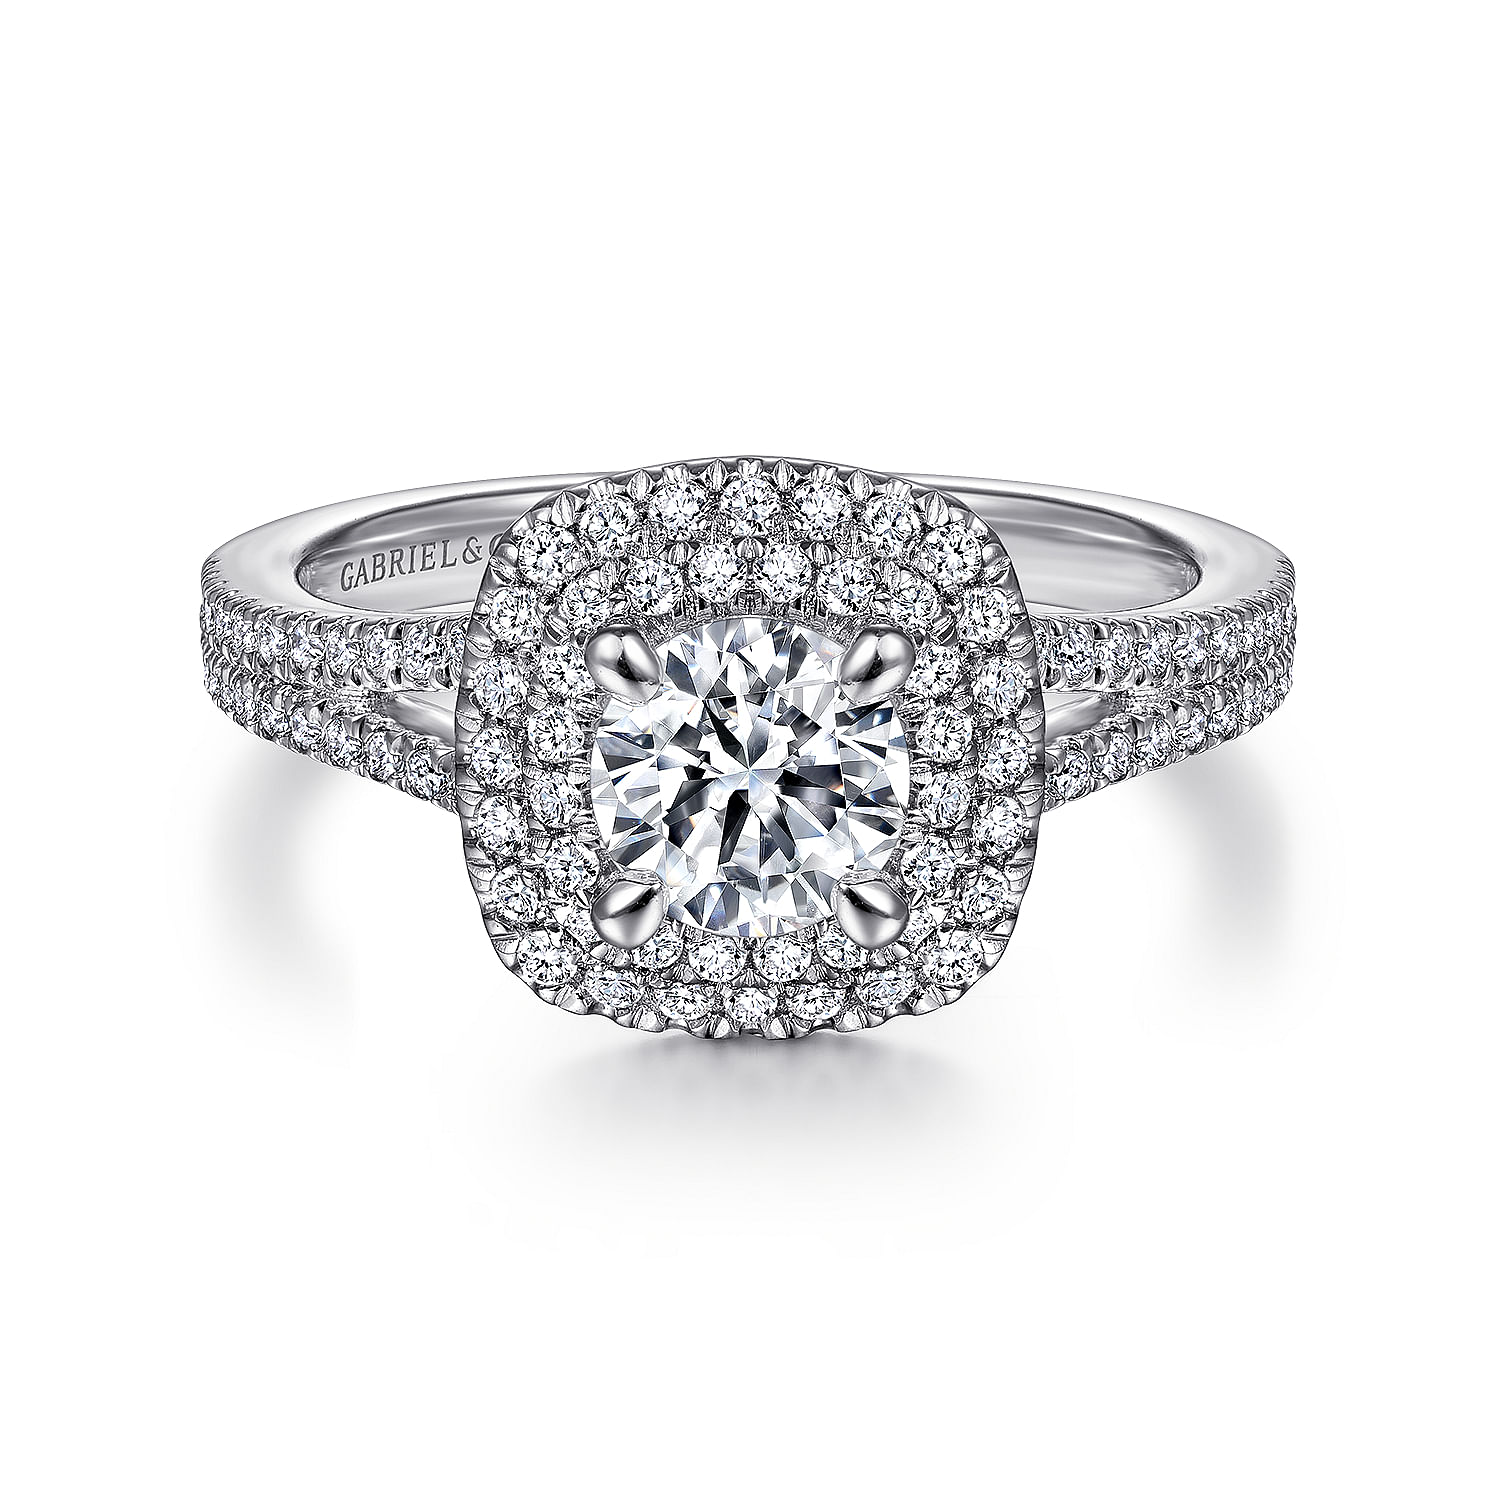 Bette---14K-White-Gold-Round-Double-Halo-Diamond-Engagement-Ring1